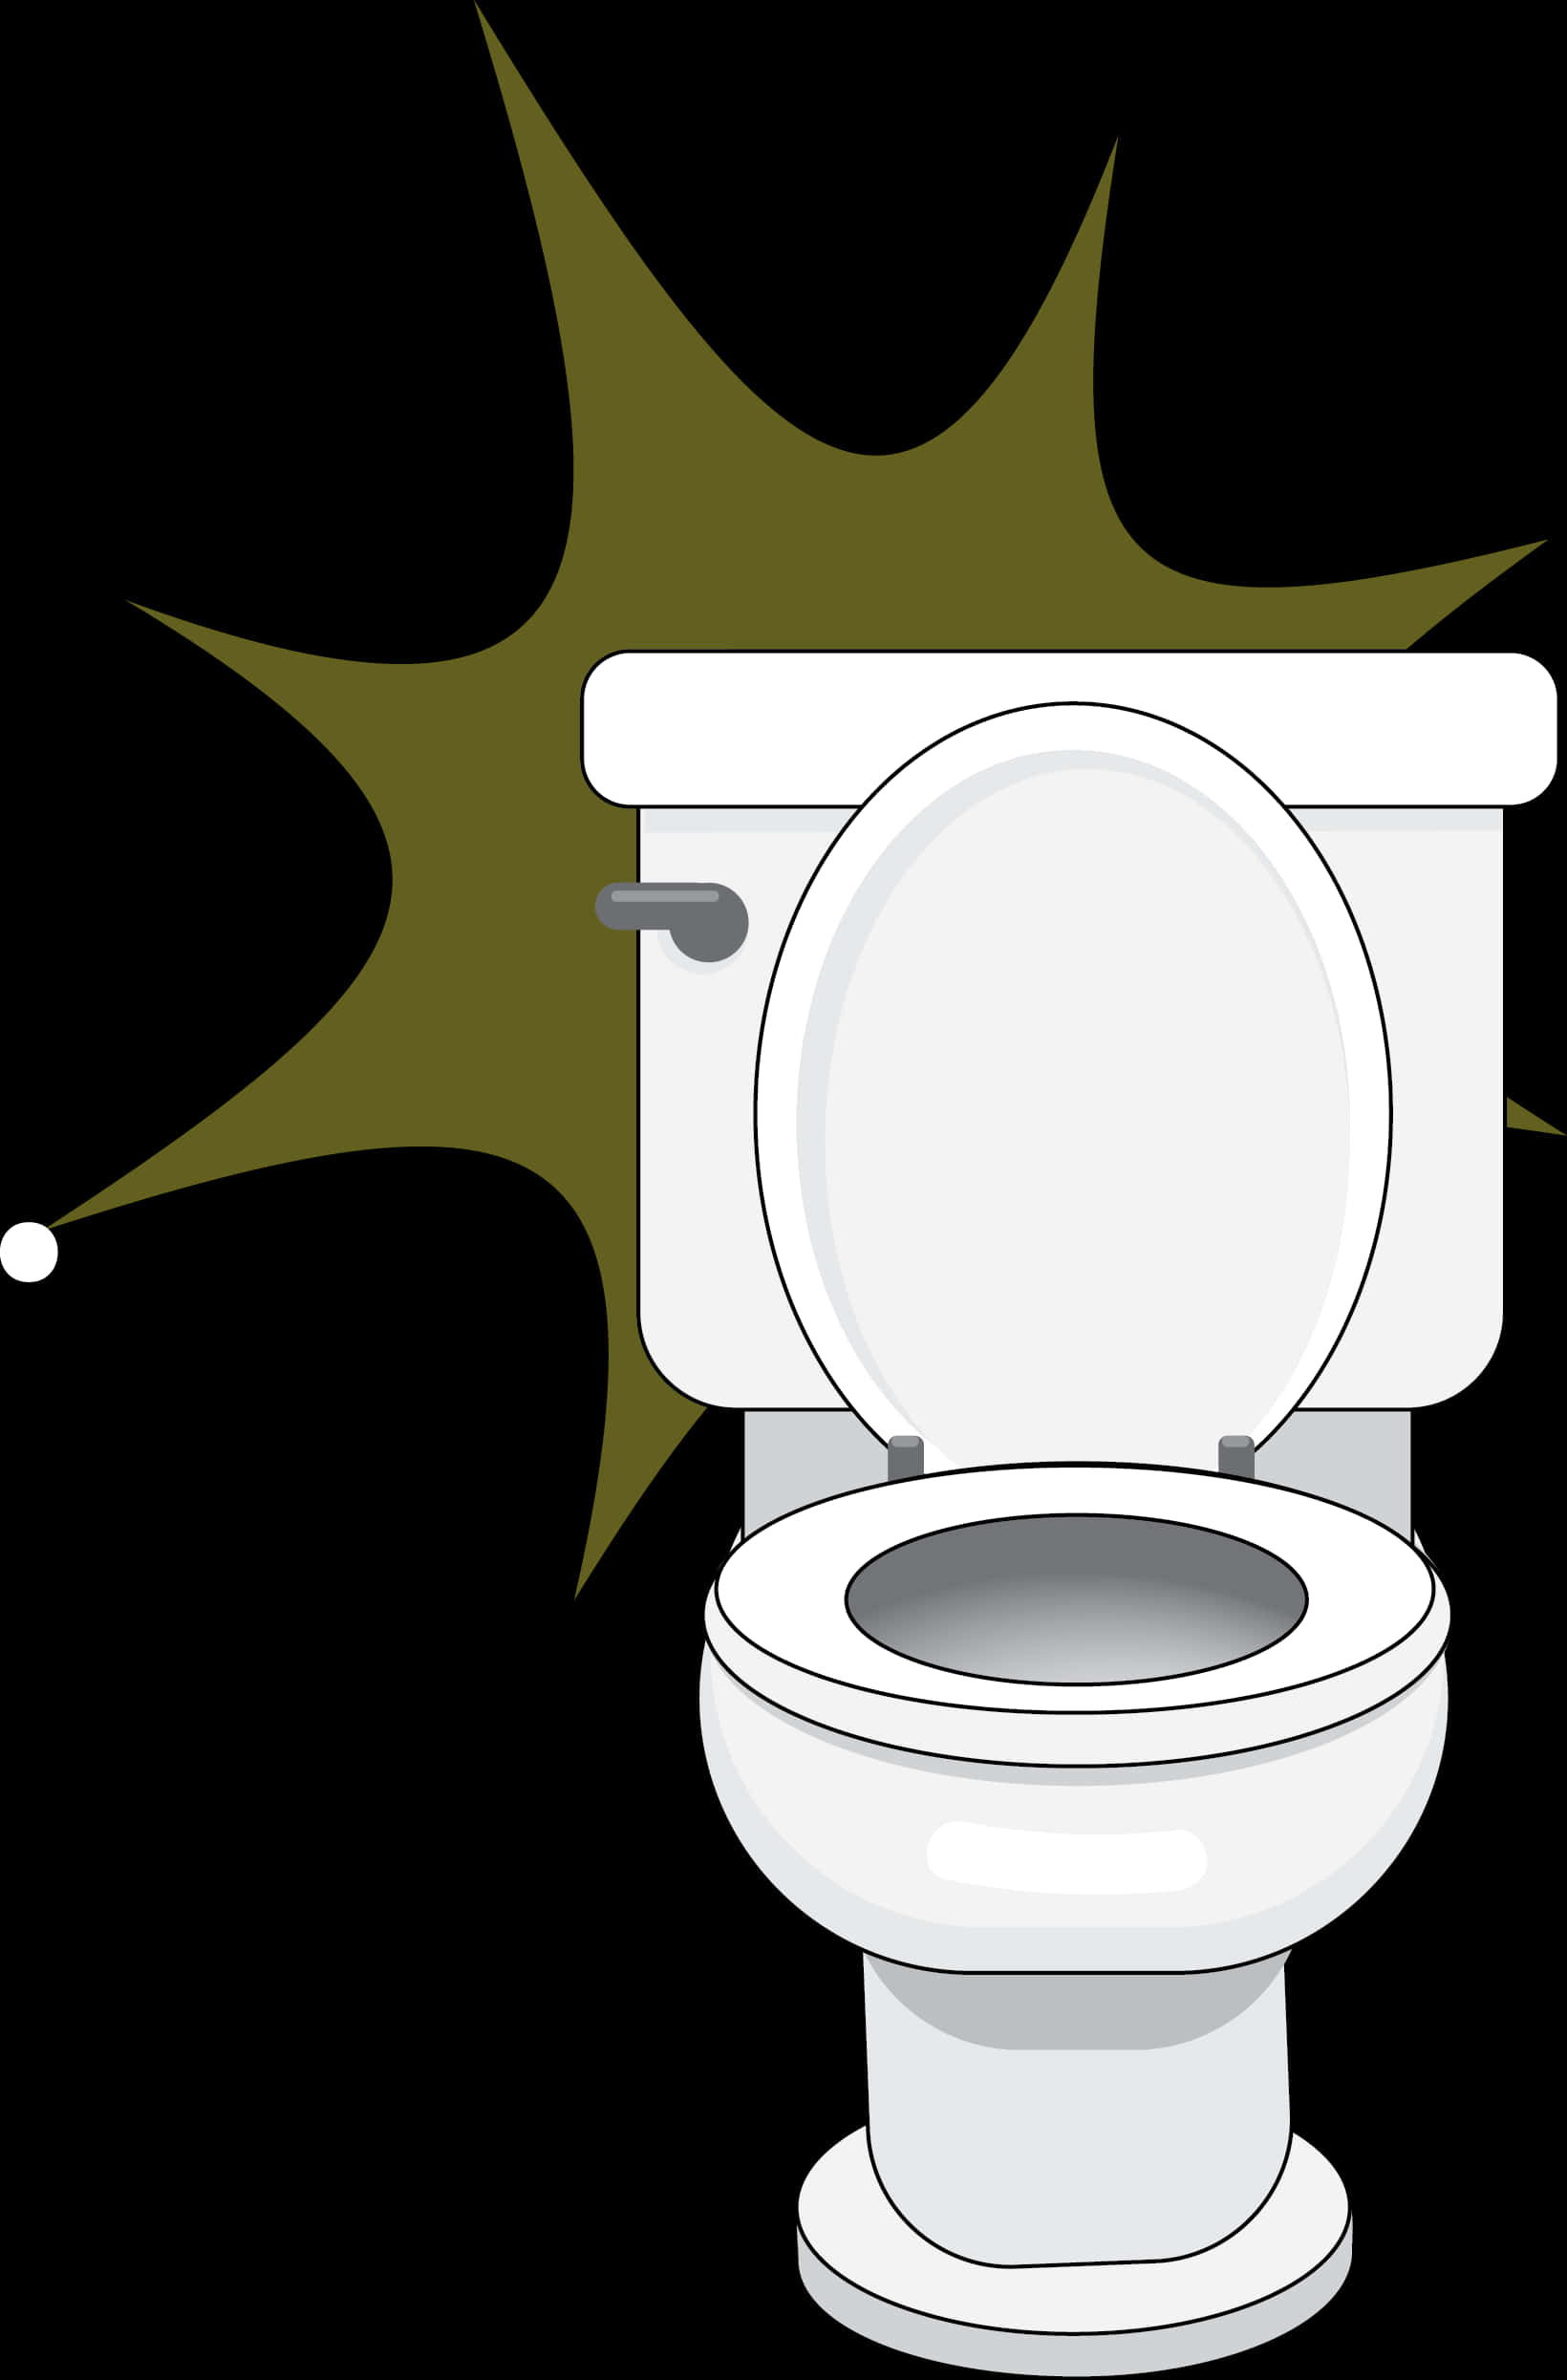 Exploding Toilet Cartoon PNG